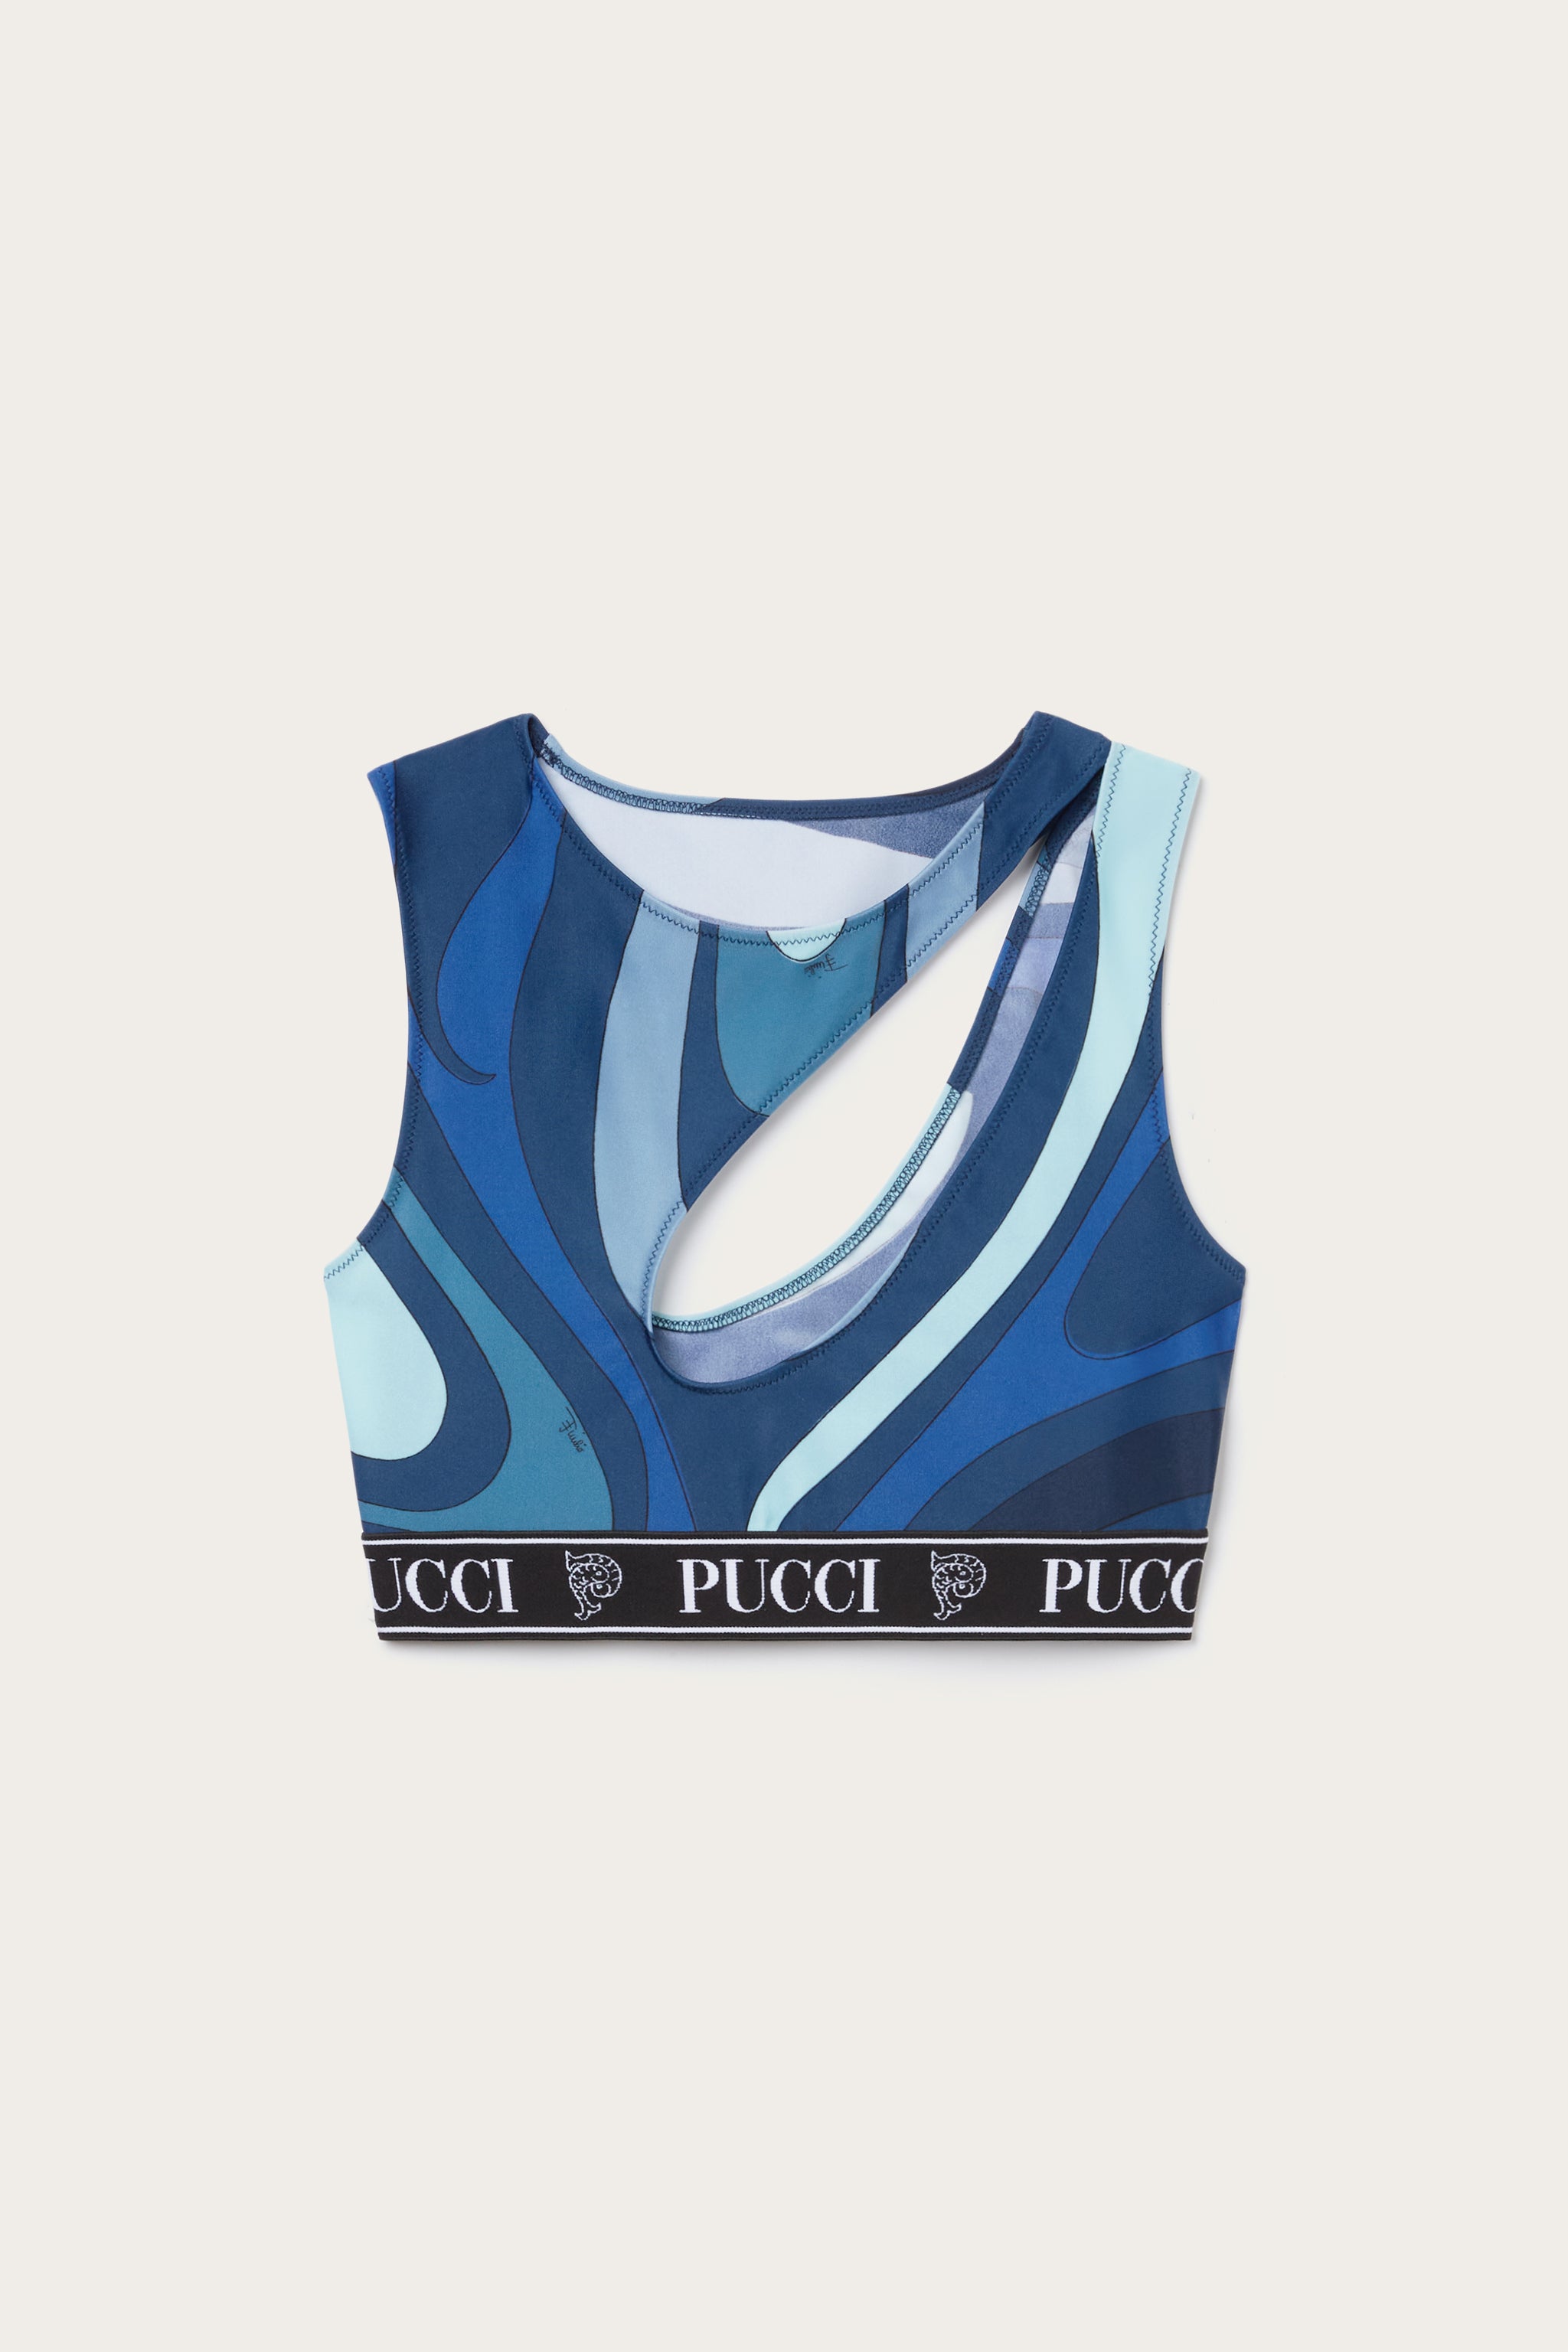 Pucci + Marmo-Print Crop Top